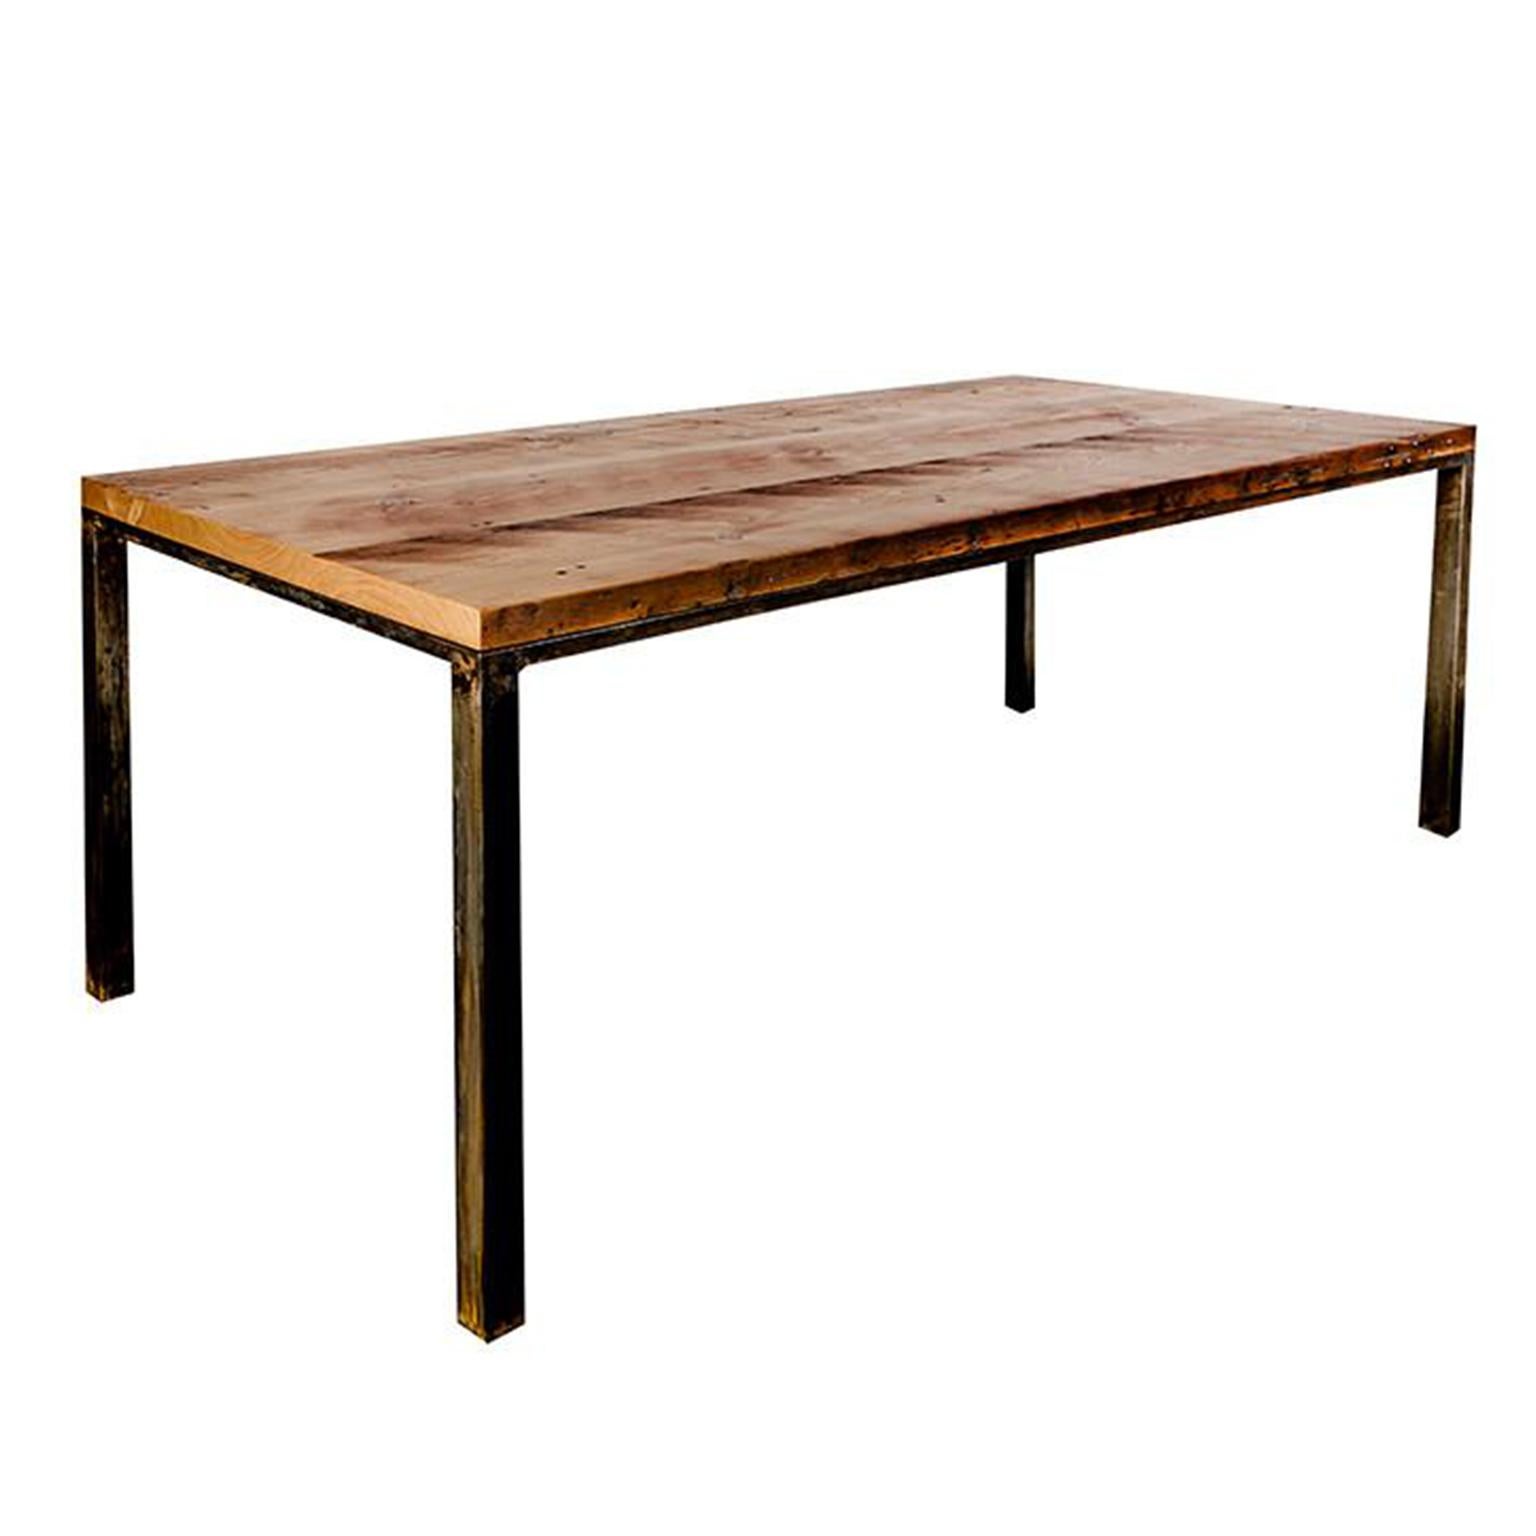 Union Wood Co. Tables